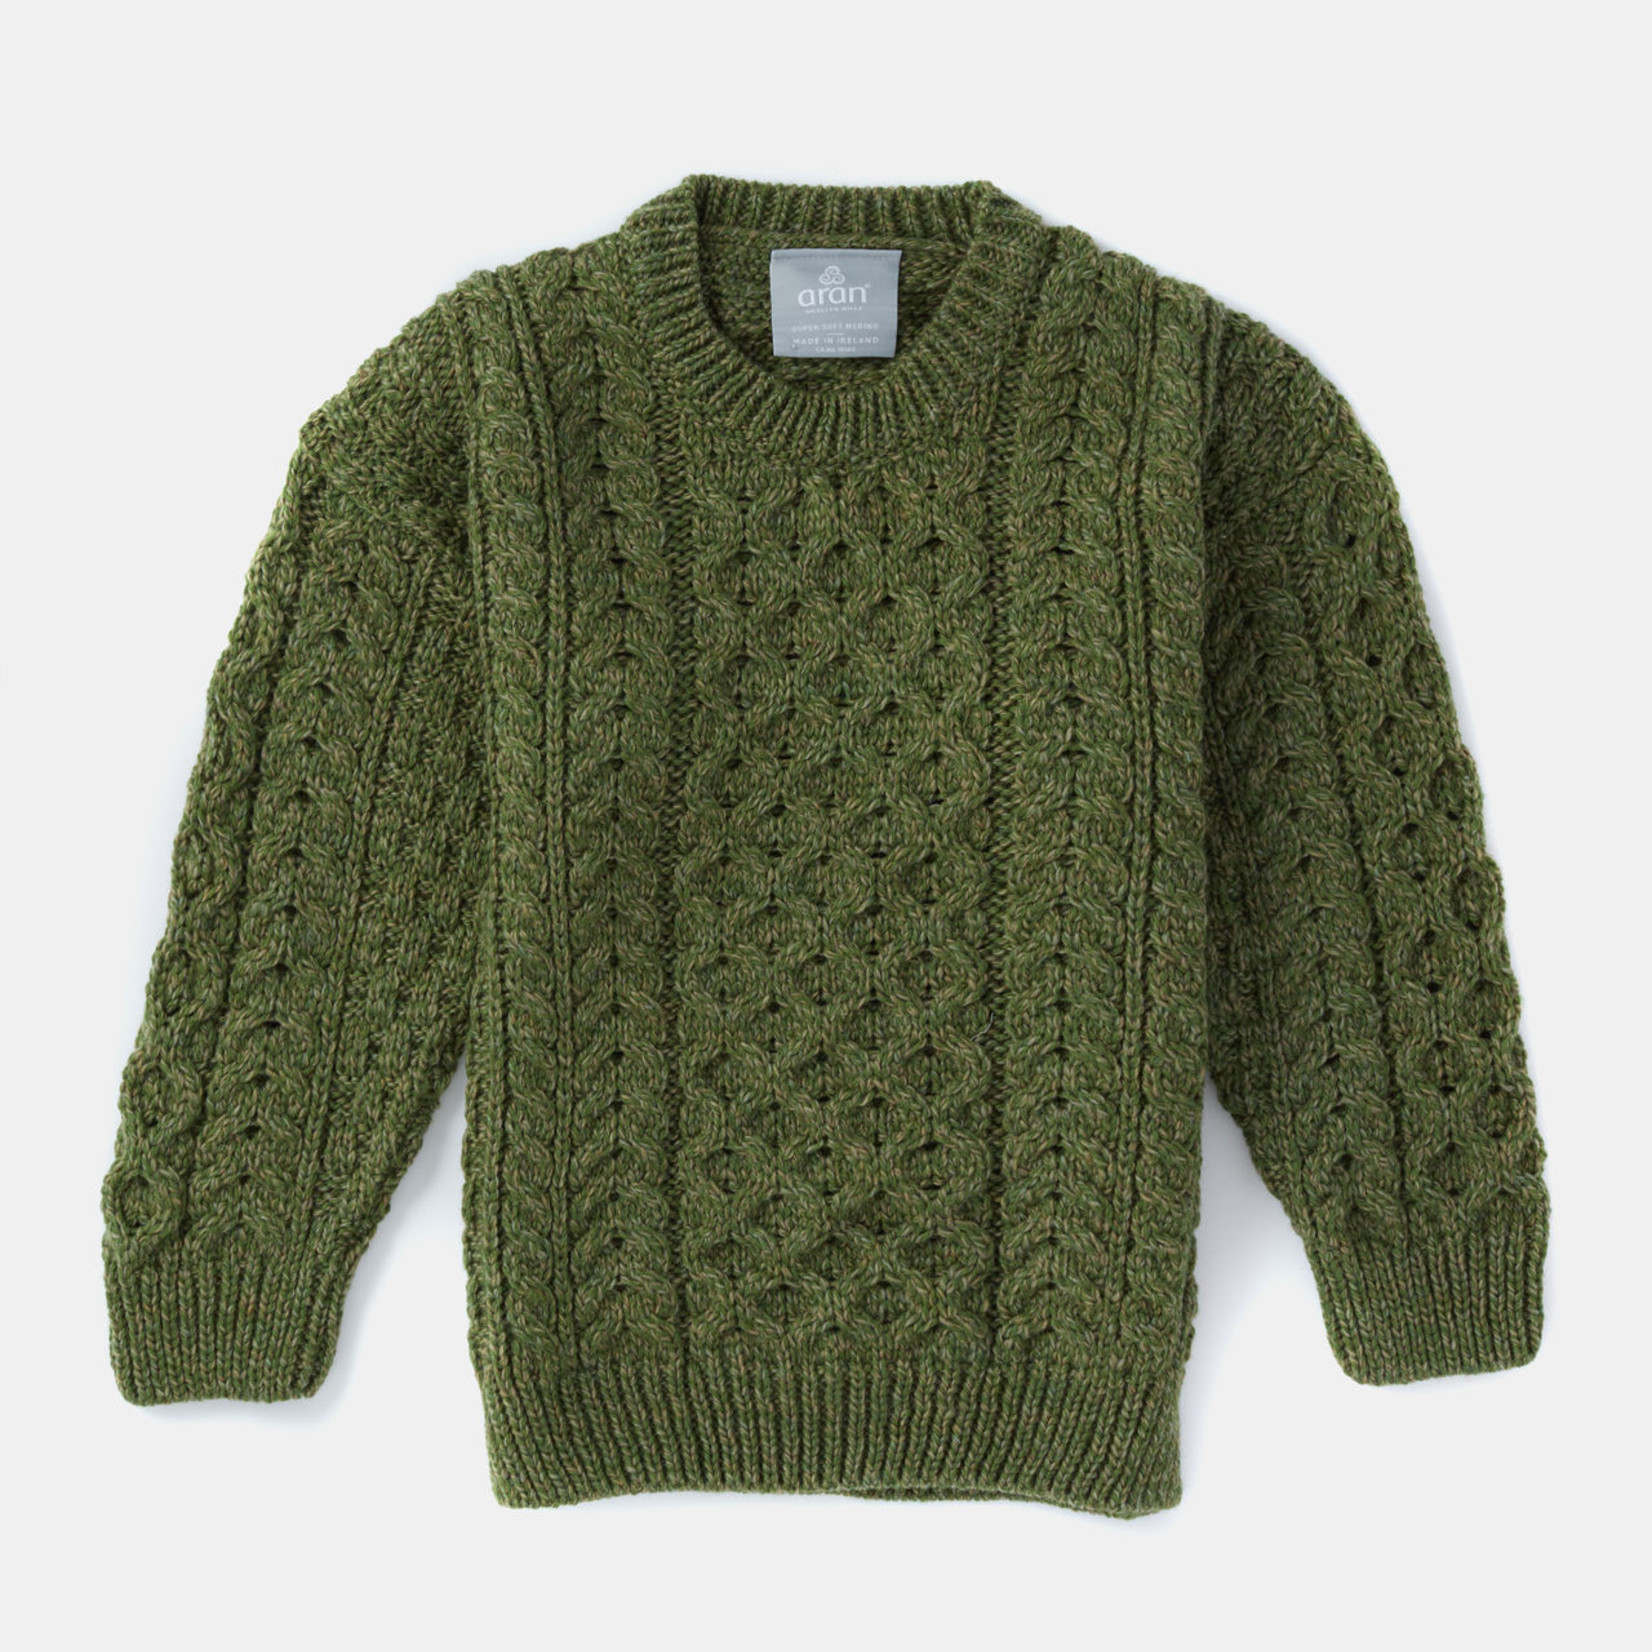 Aran Woollen Mills Child Aran Supersoft Wool Crewneck Sweater